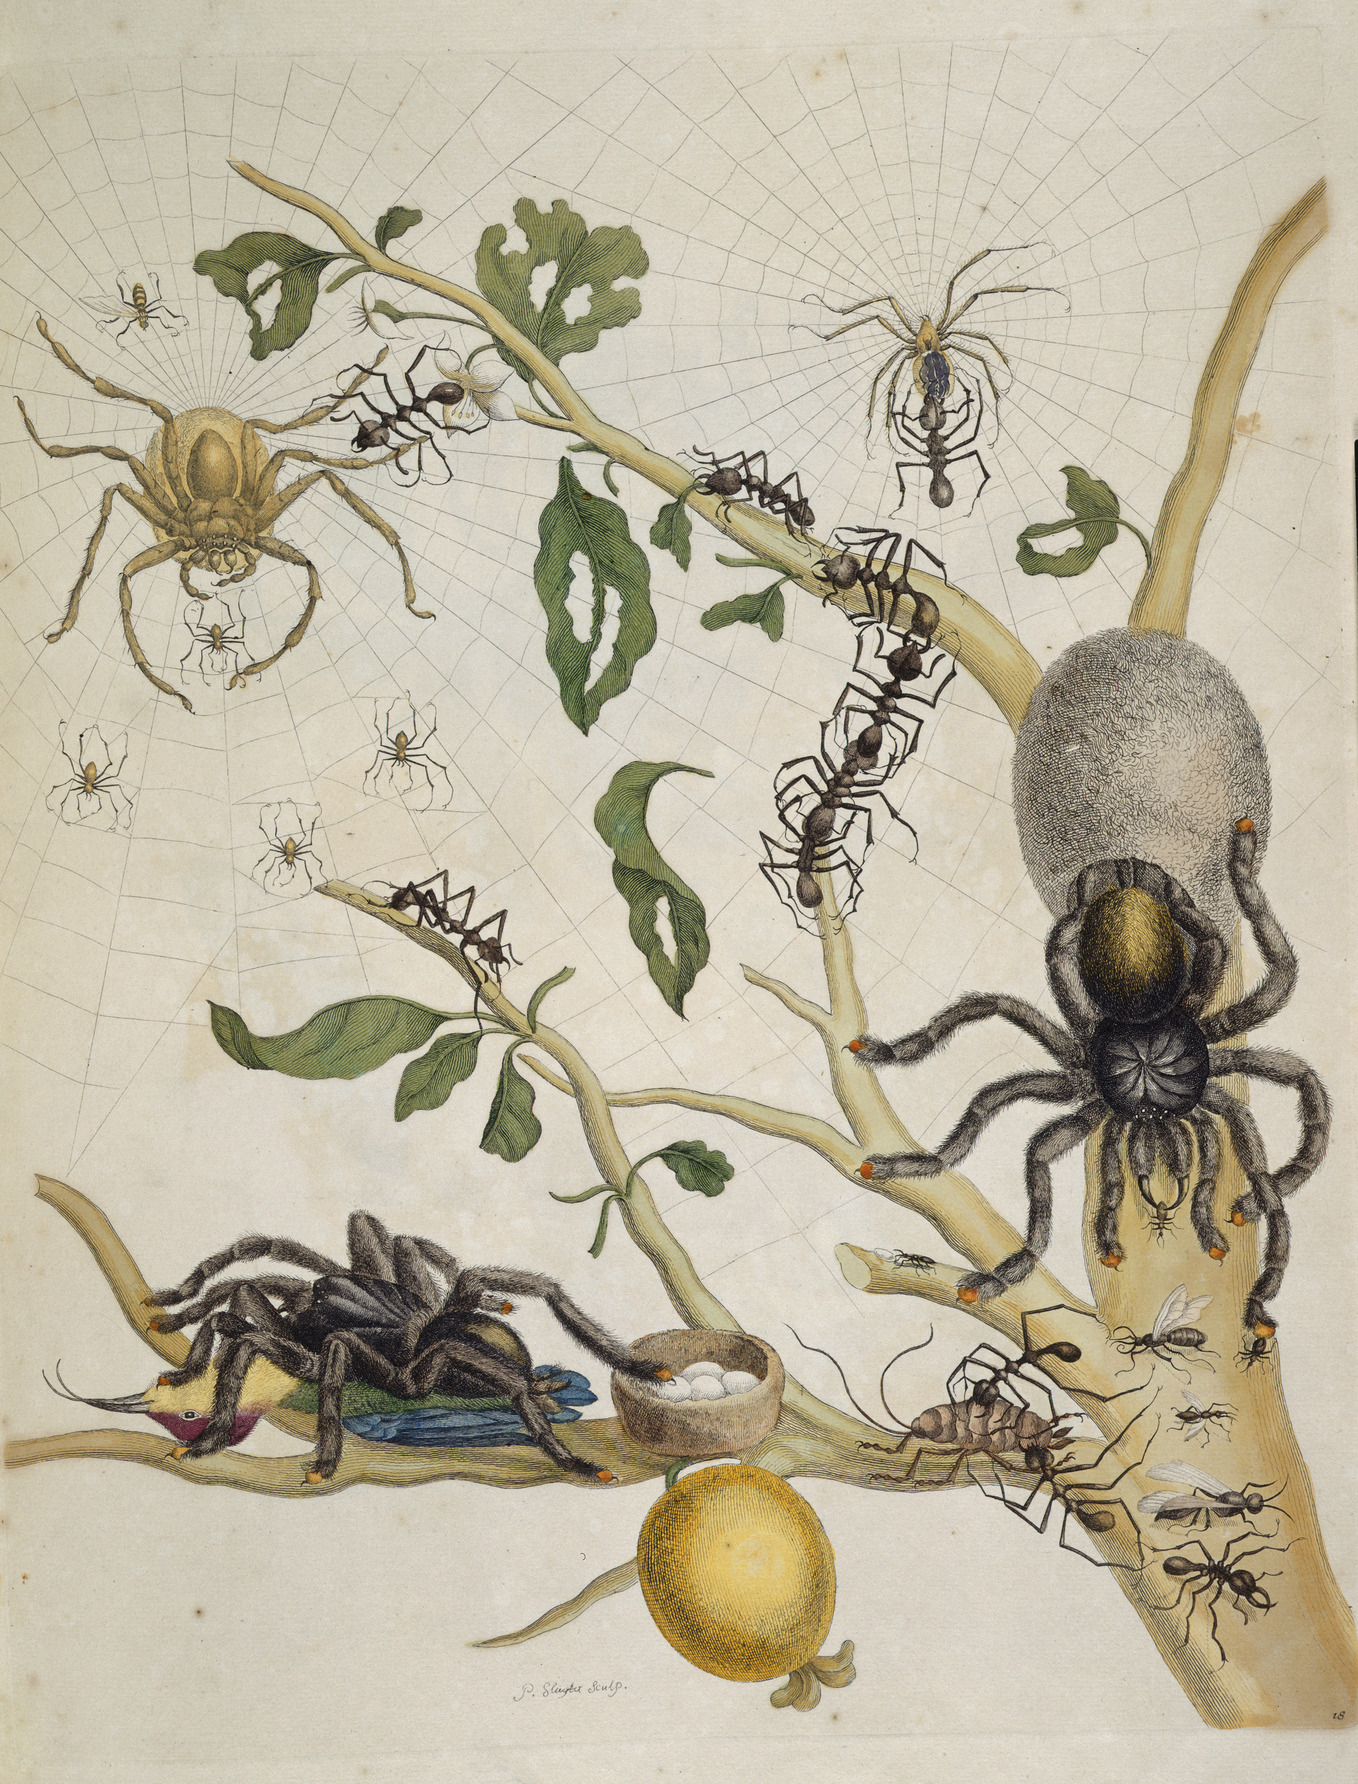 Metamorphosis insectorum Surinamensium.  Notice the bird-eating spider in the bottom of the image.